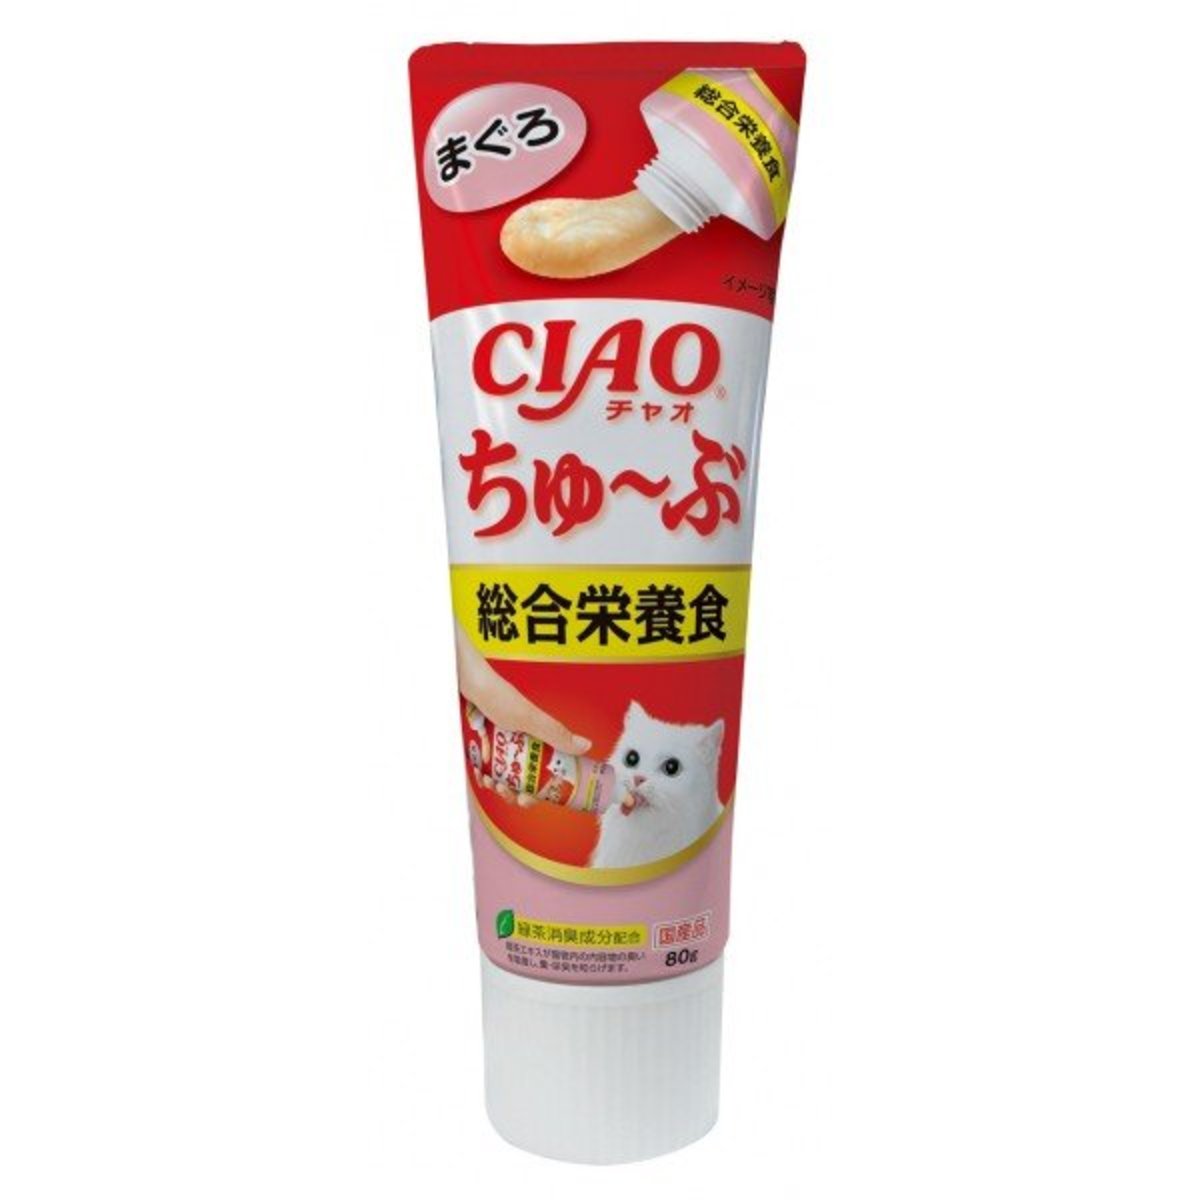 CIAO Tuna Puree Complete Diet (80g)Cat Snack*Soft Tube* CS-155